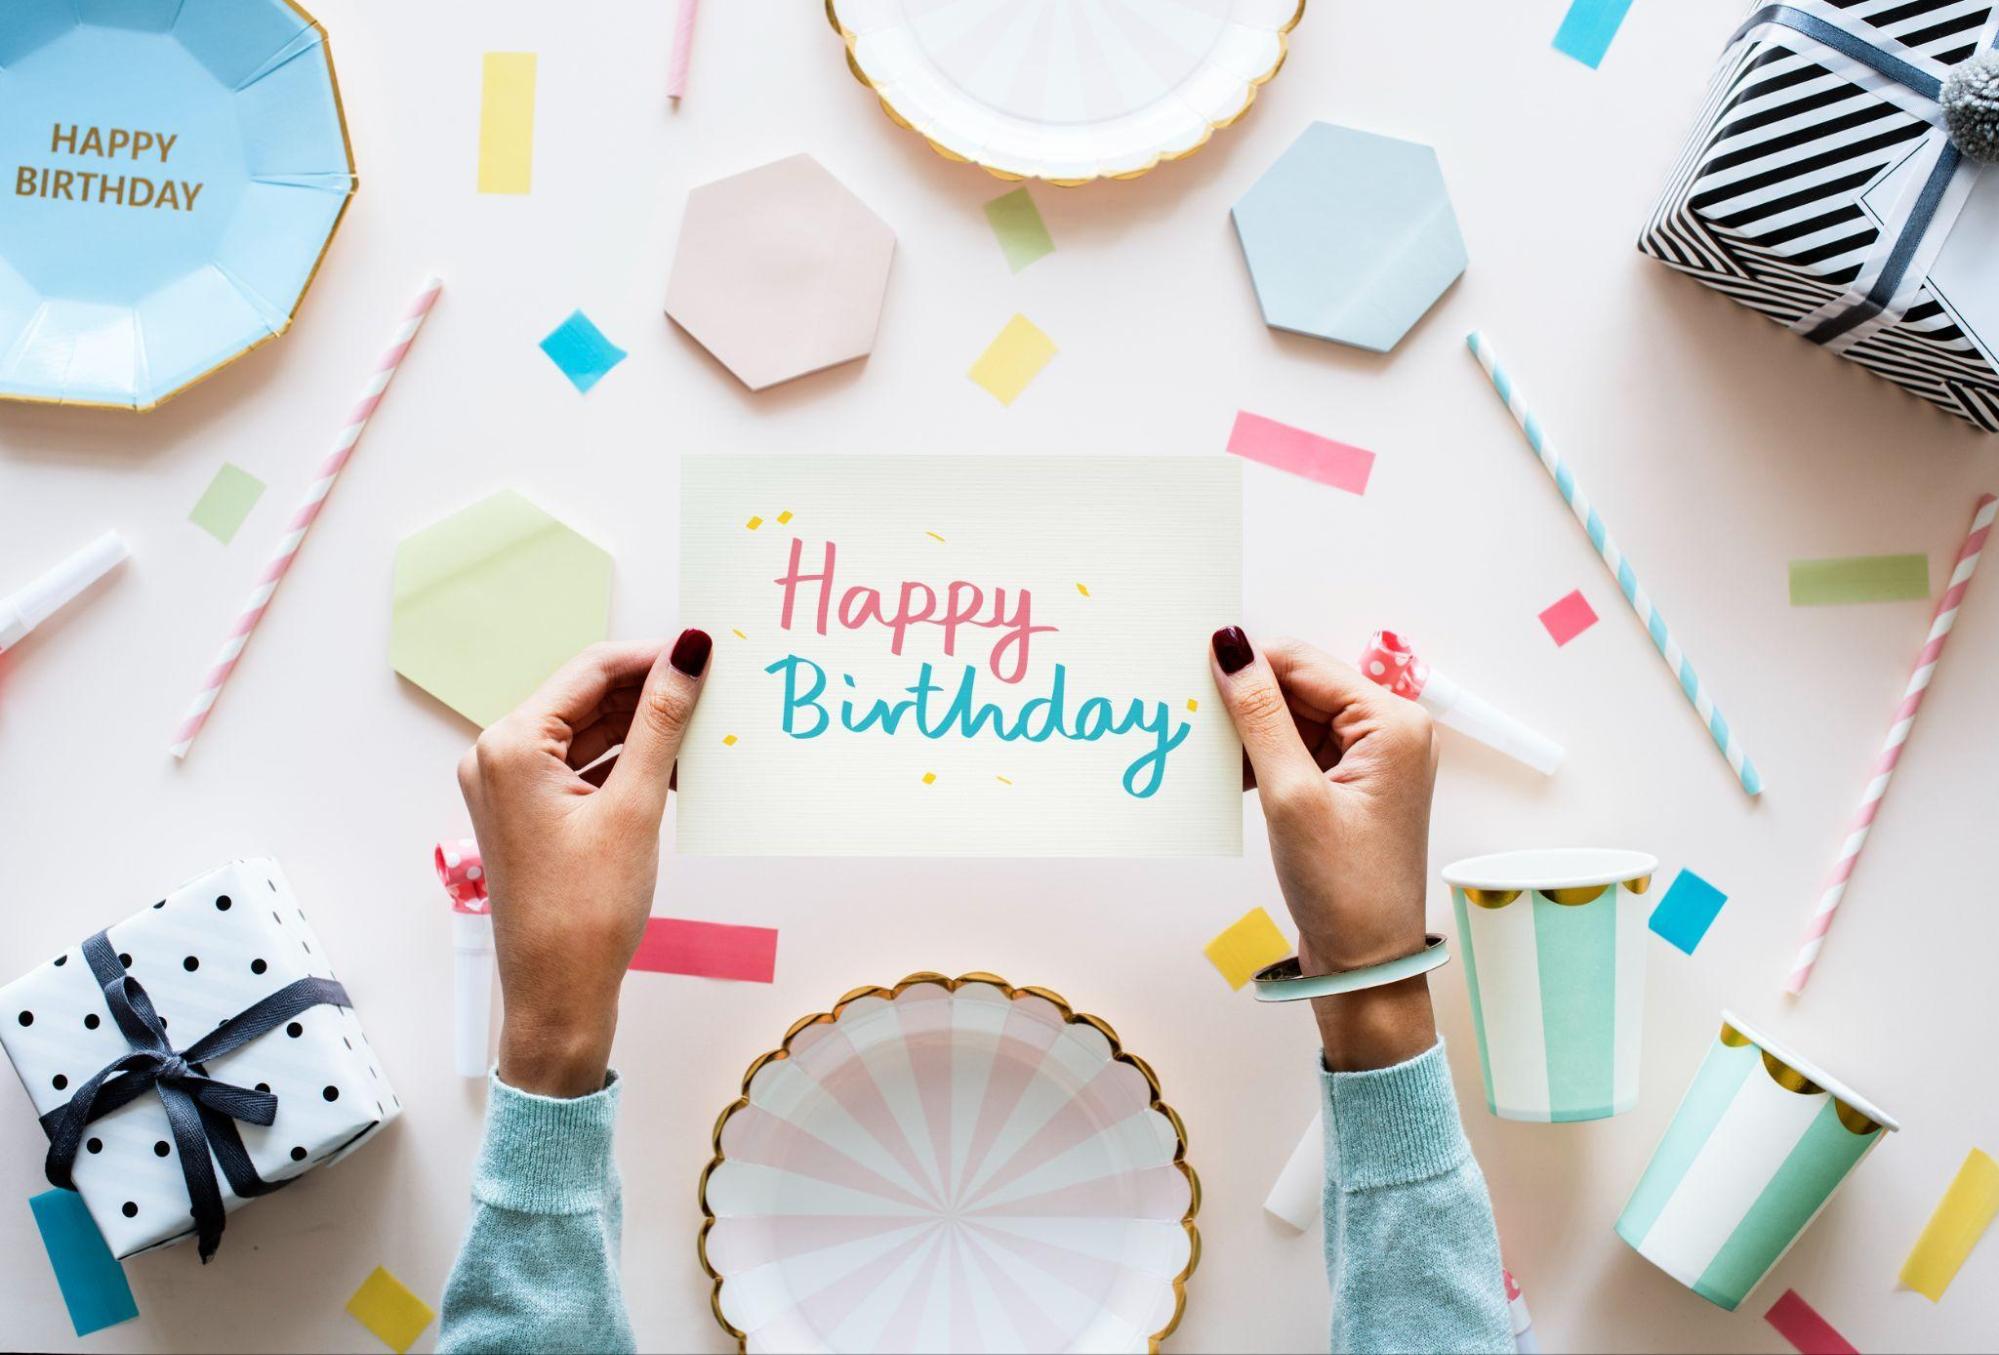 The Art of Writing Heartfelt Birthday Wishes